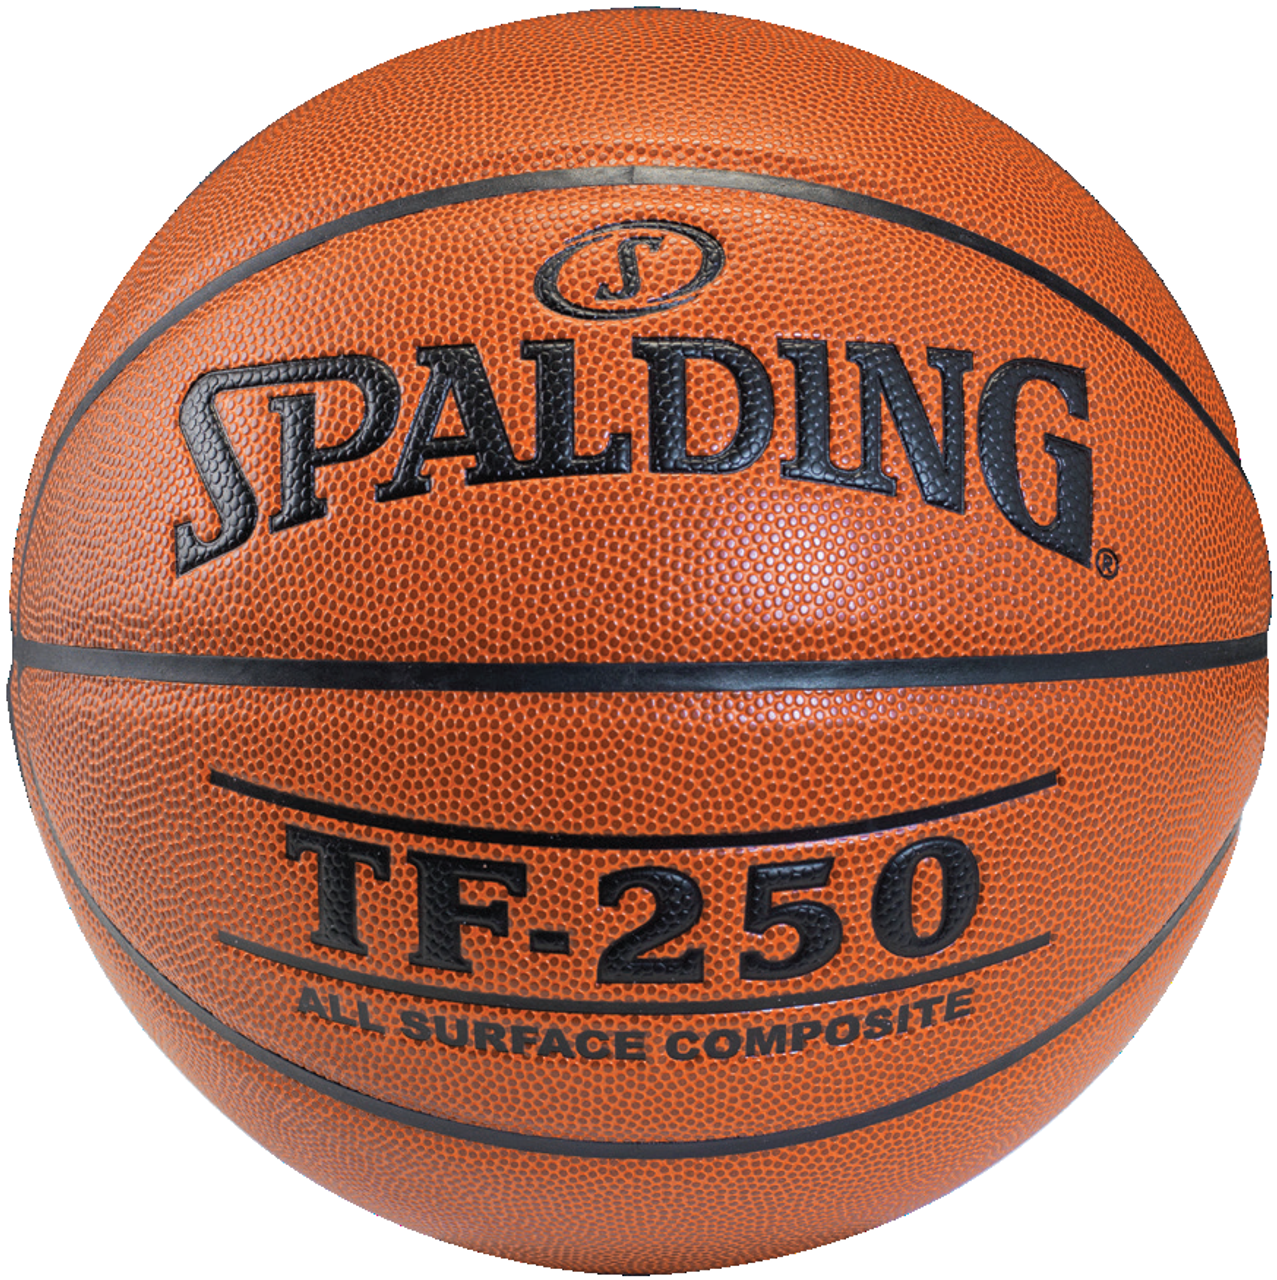 Spalding TF- 250